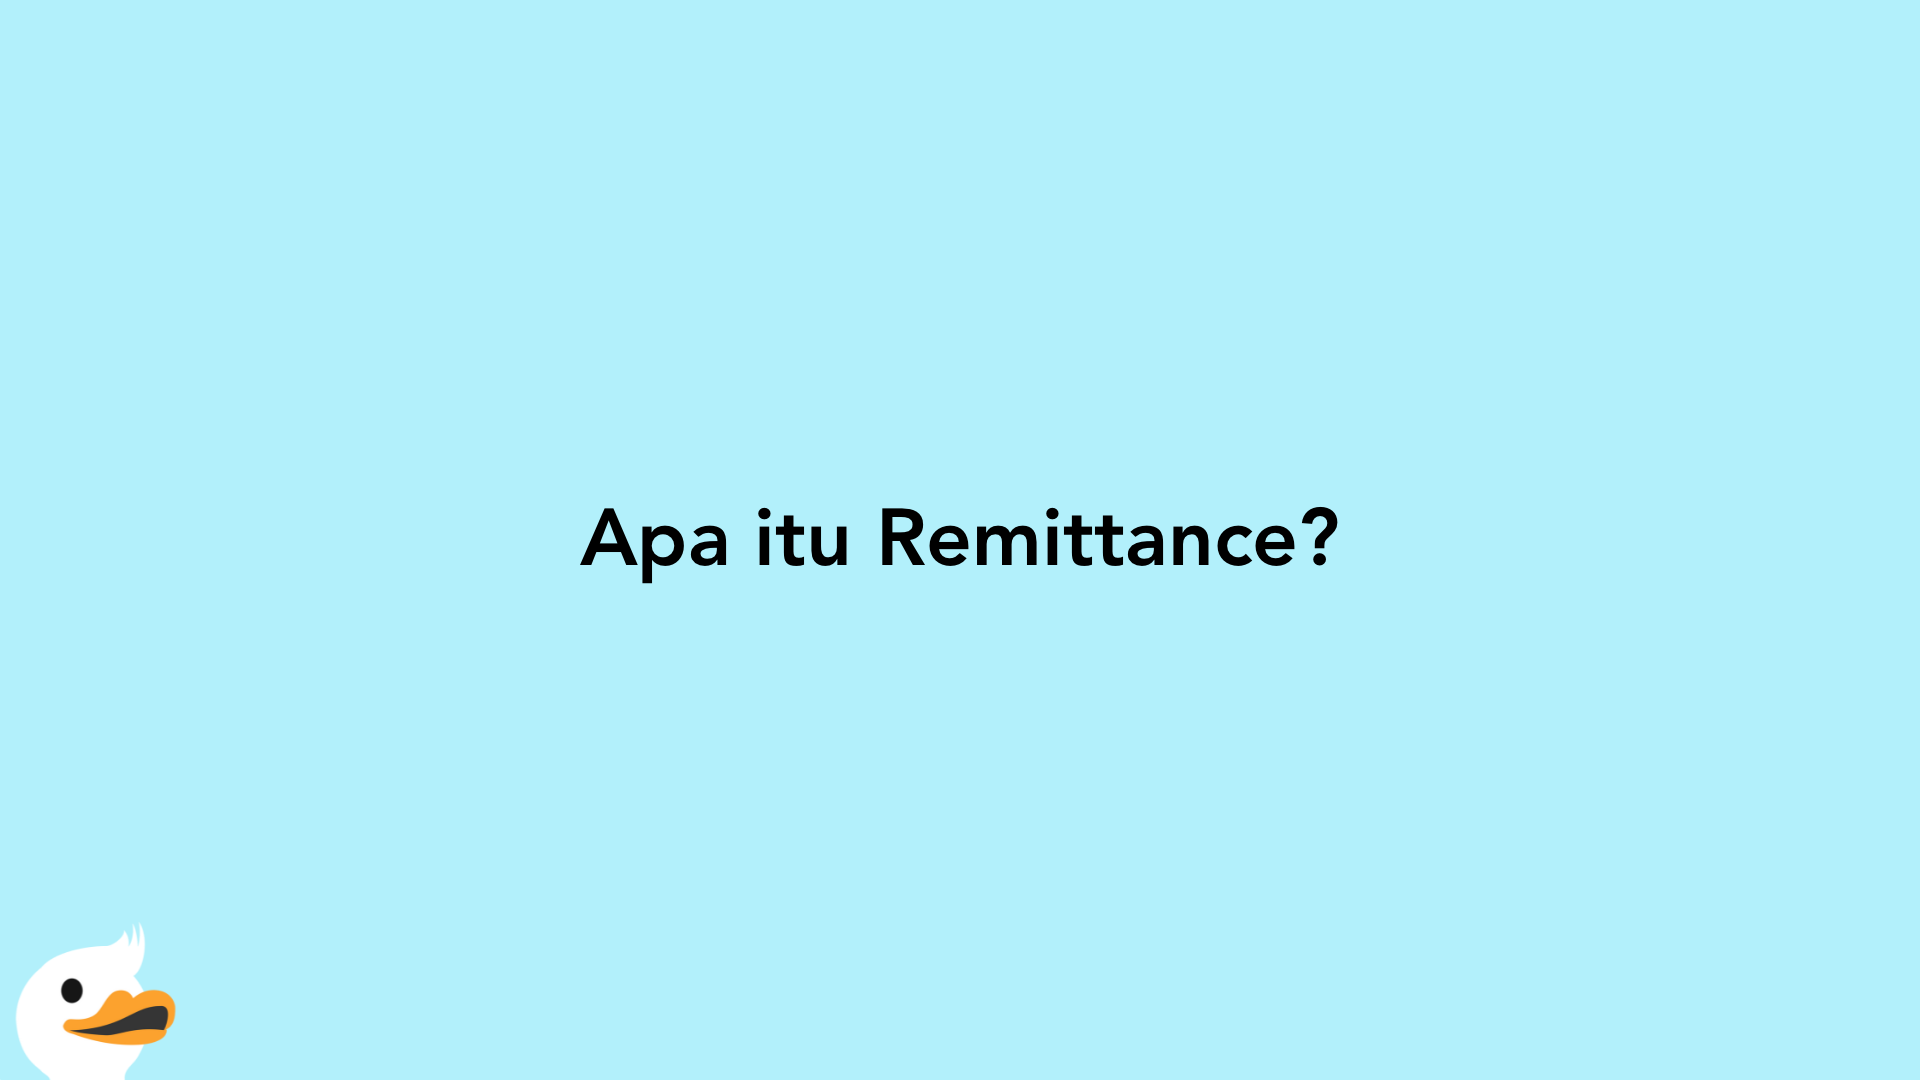 Apa itu Remittance?